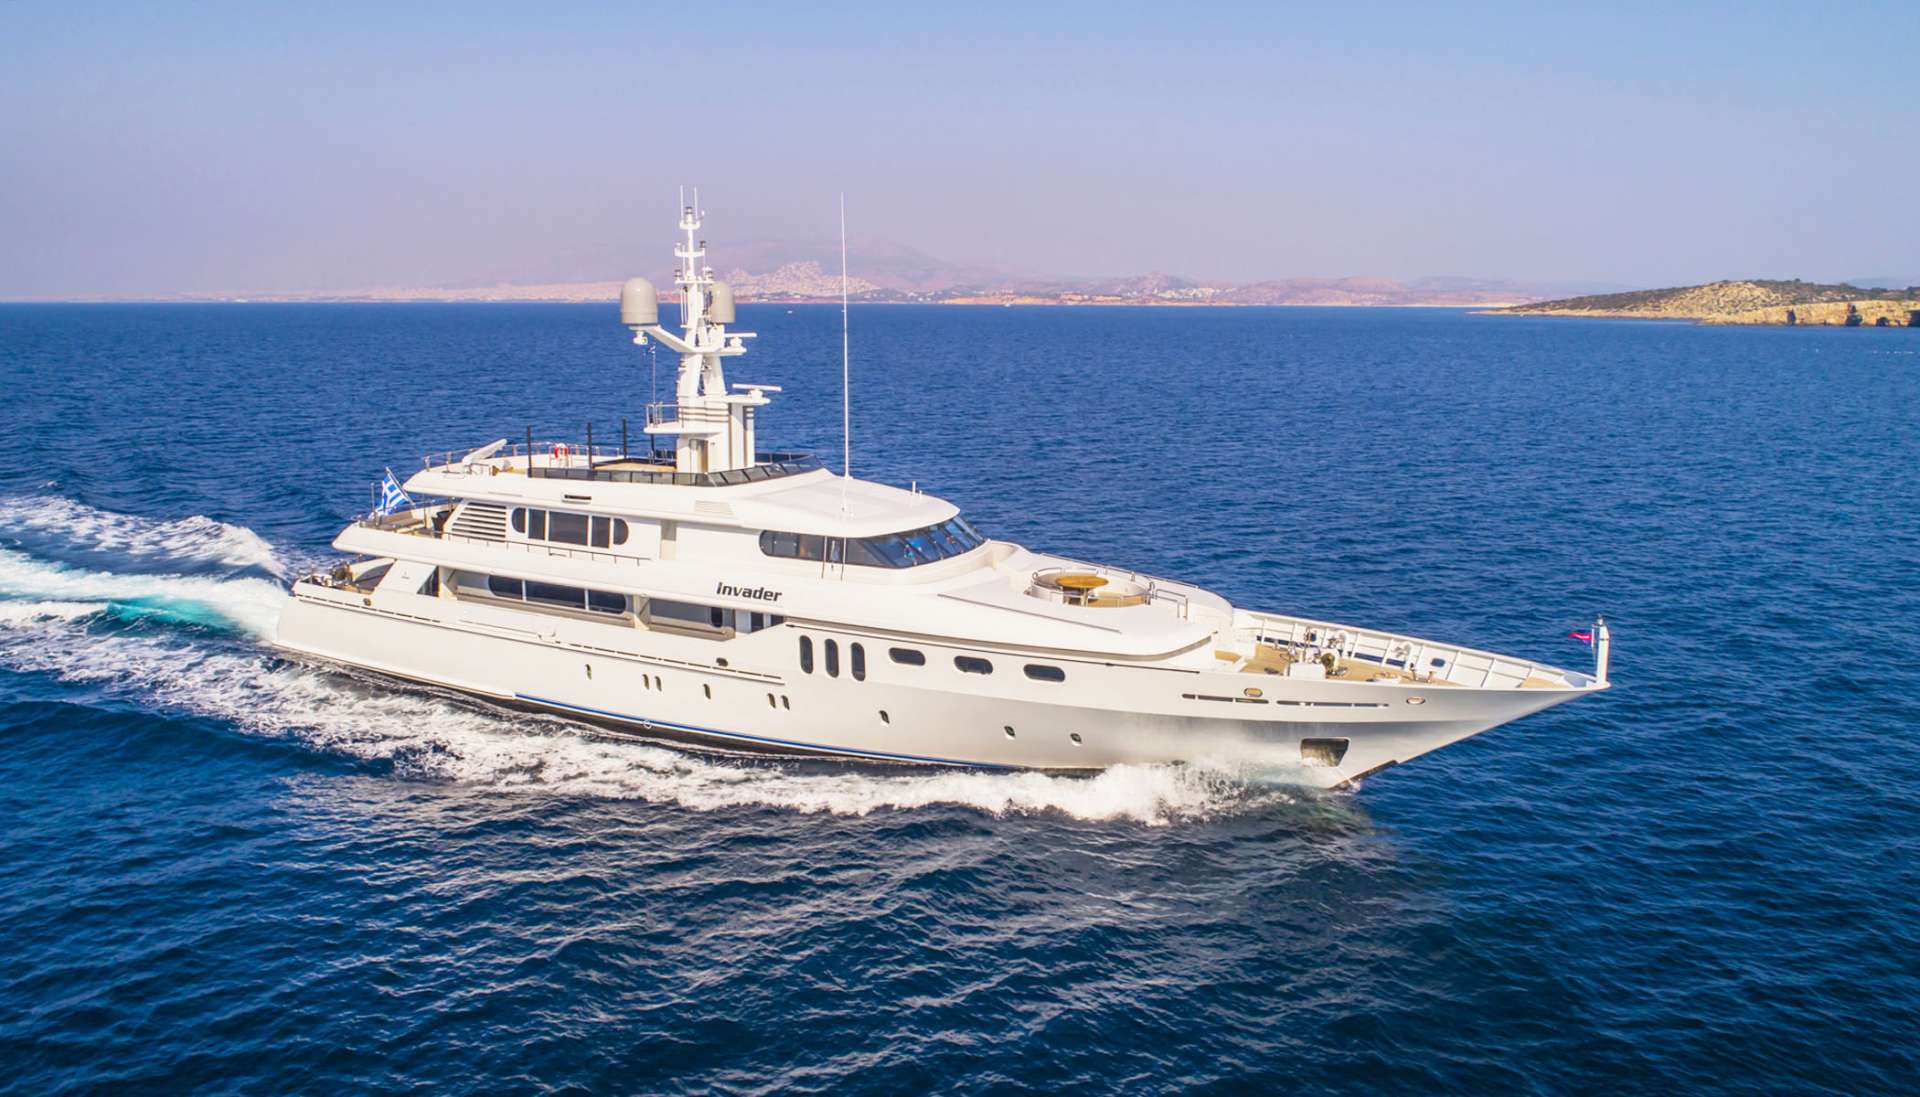 Invader luxury crewed Codecasa 164 motor yacht charter cruising Greece